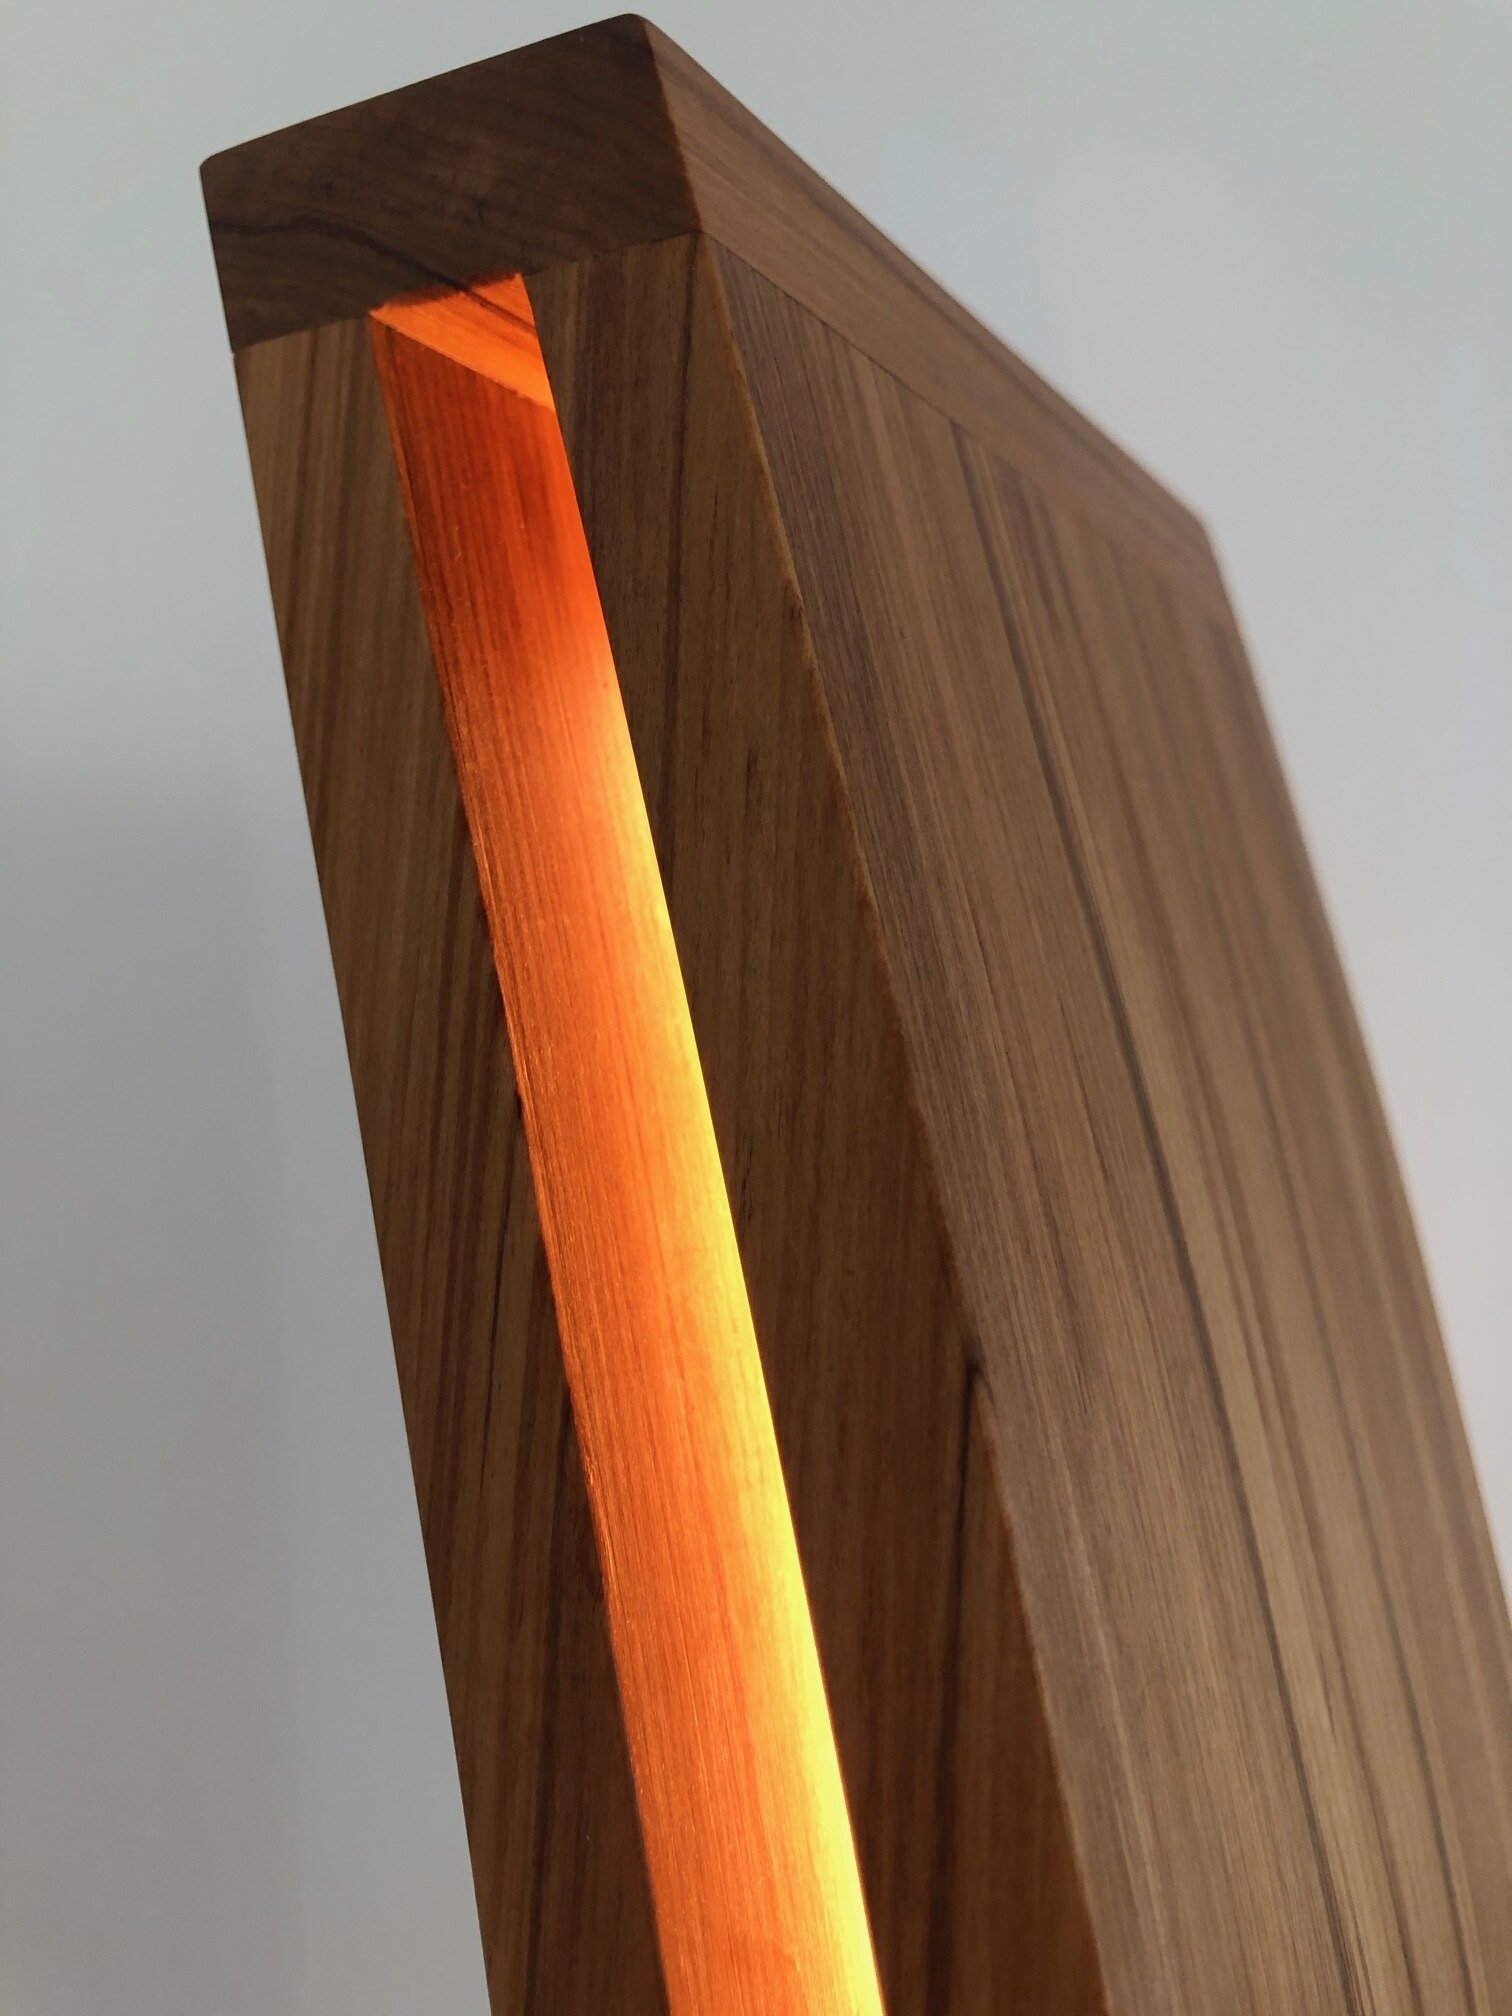 The Curl Floor Lamp top detail